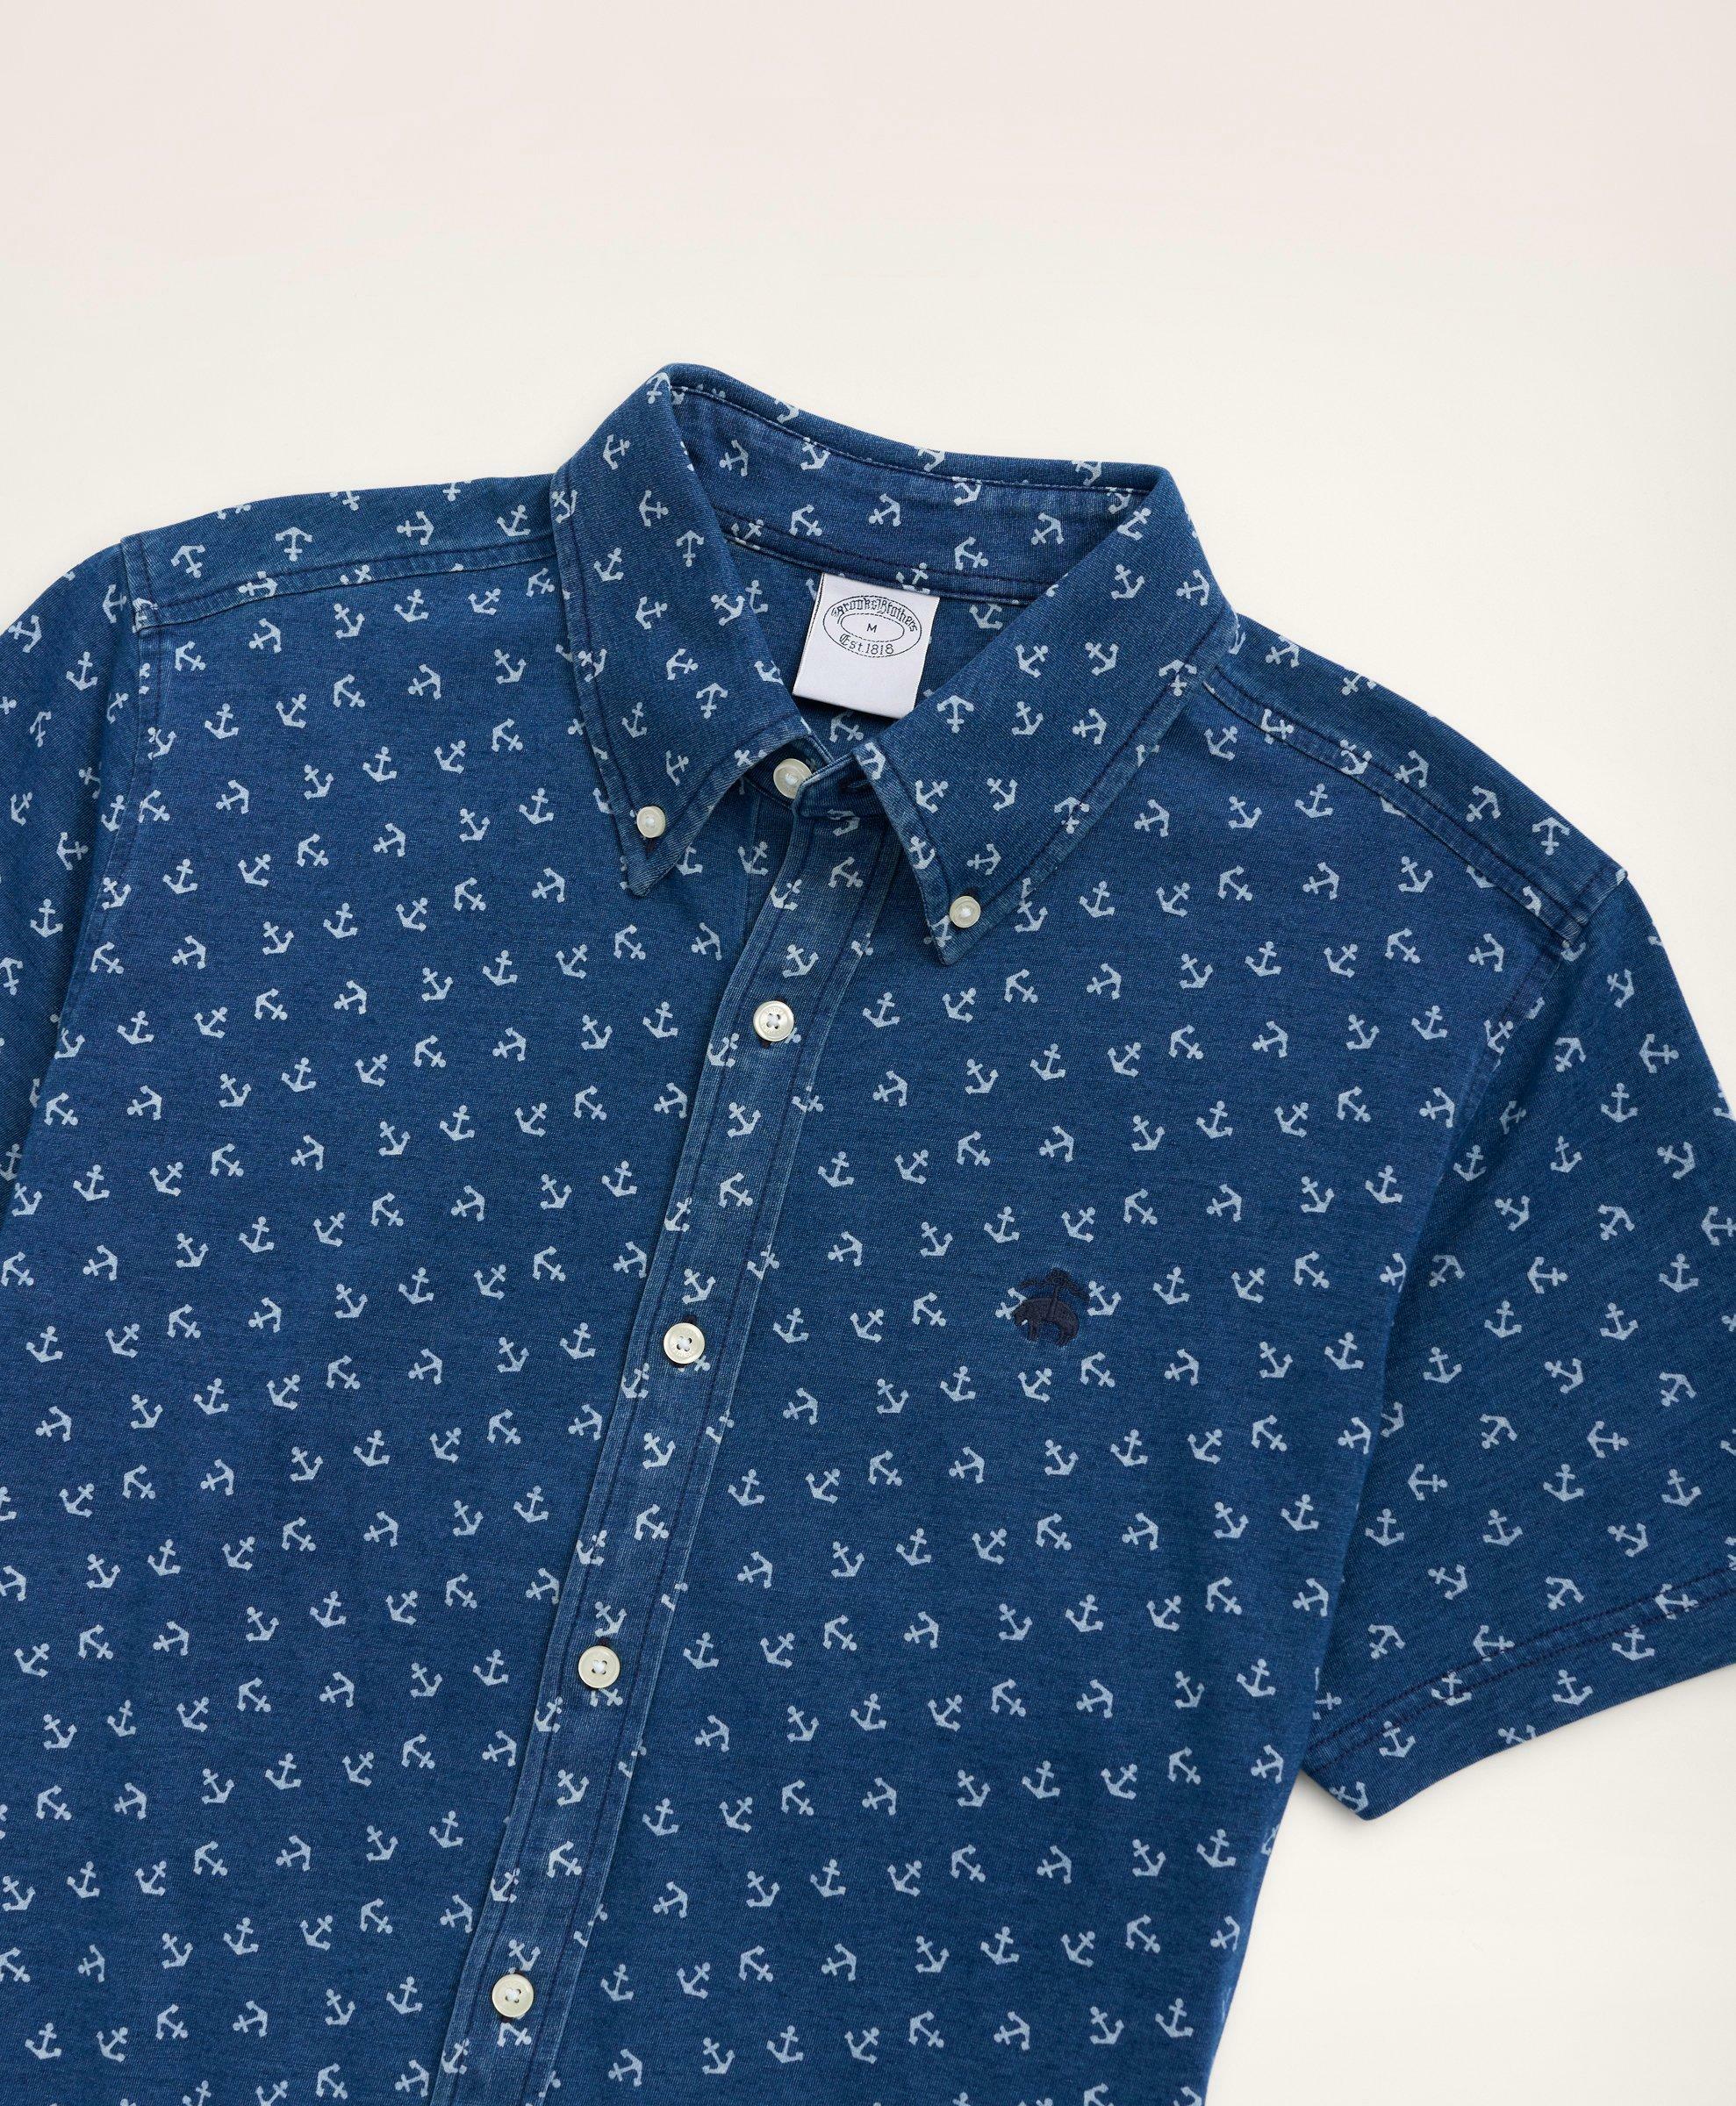 Brooks Brothers Men's Washed Cotton Jersey Anchor Print Shirt | Indigo